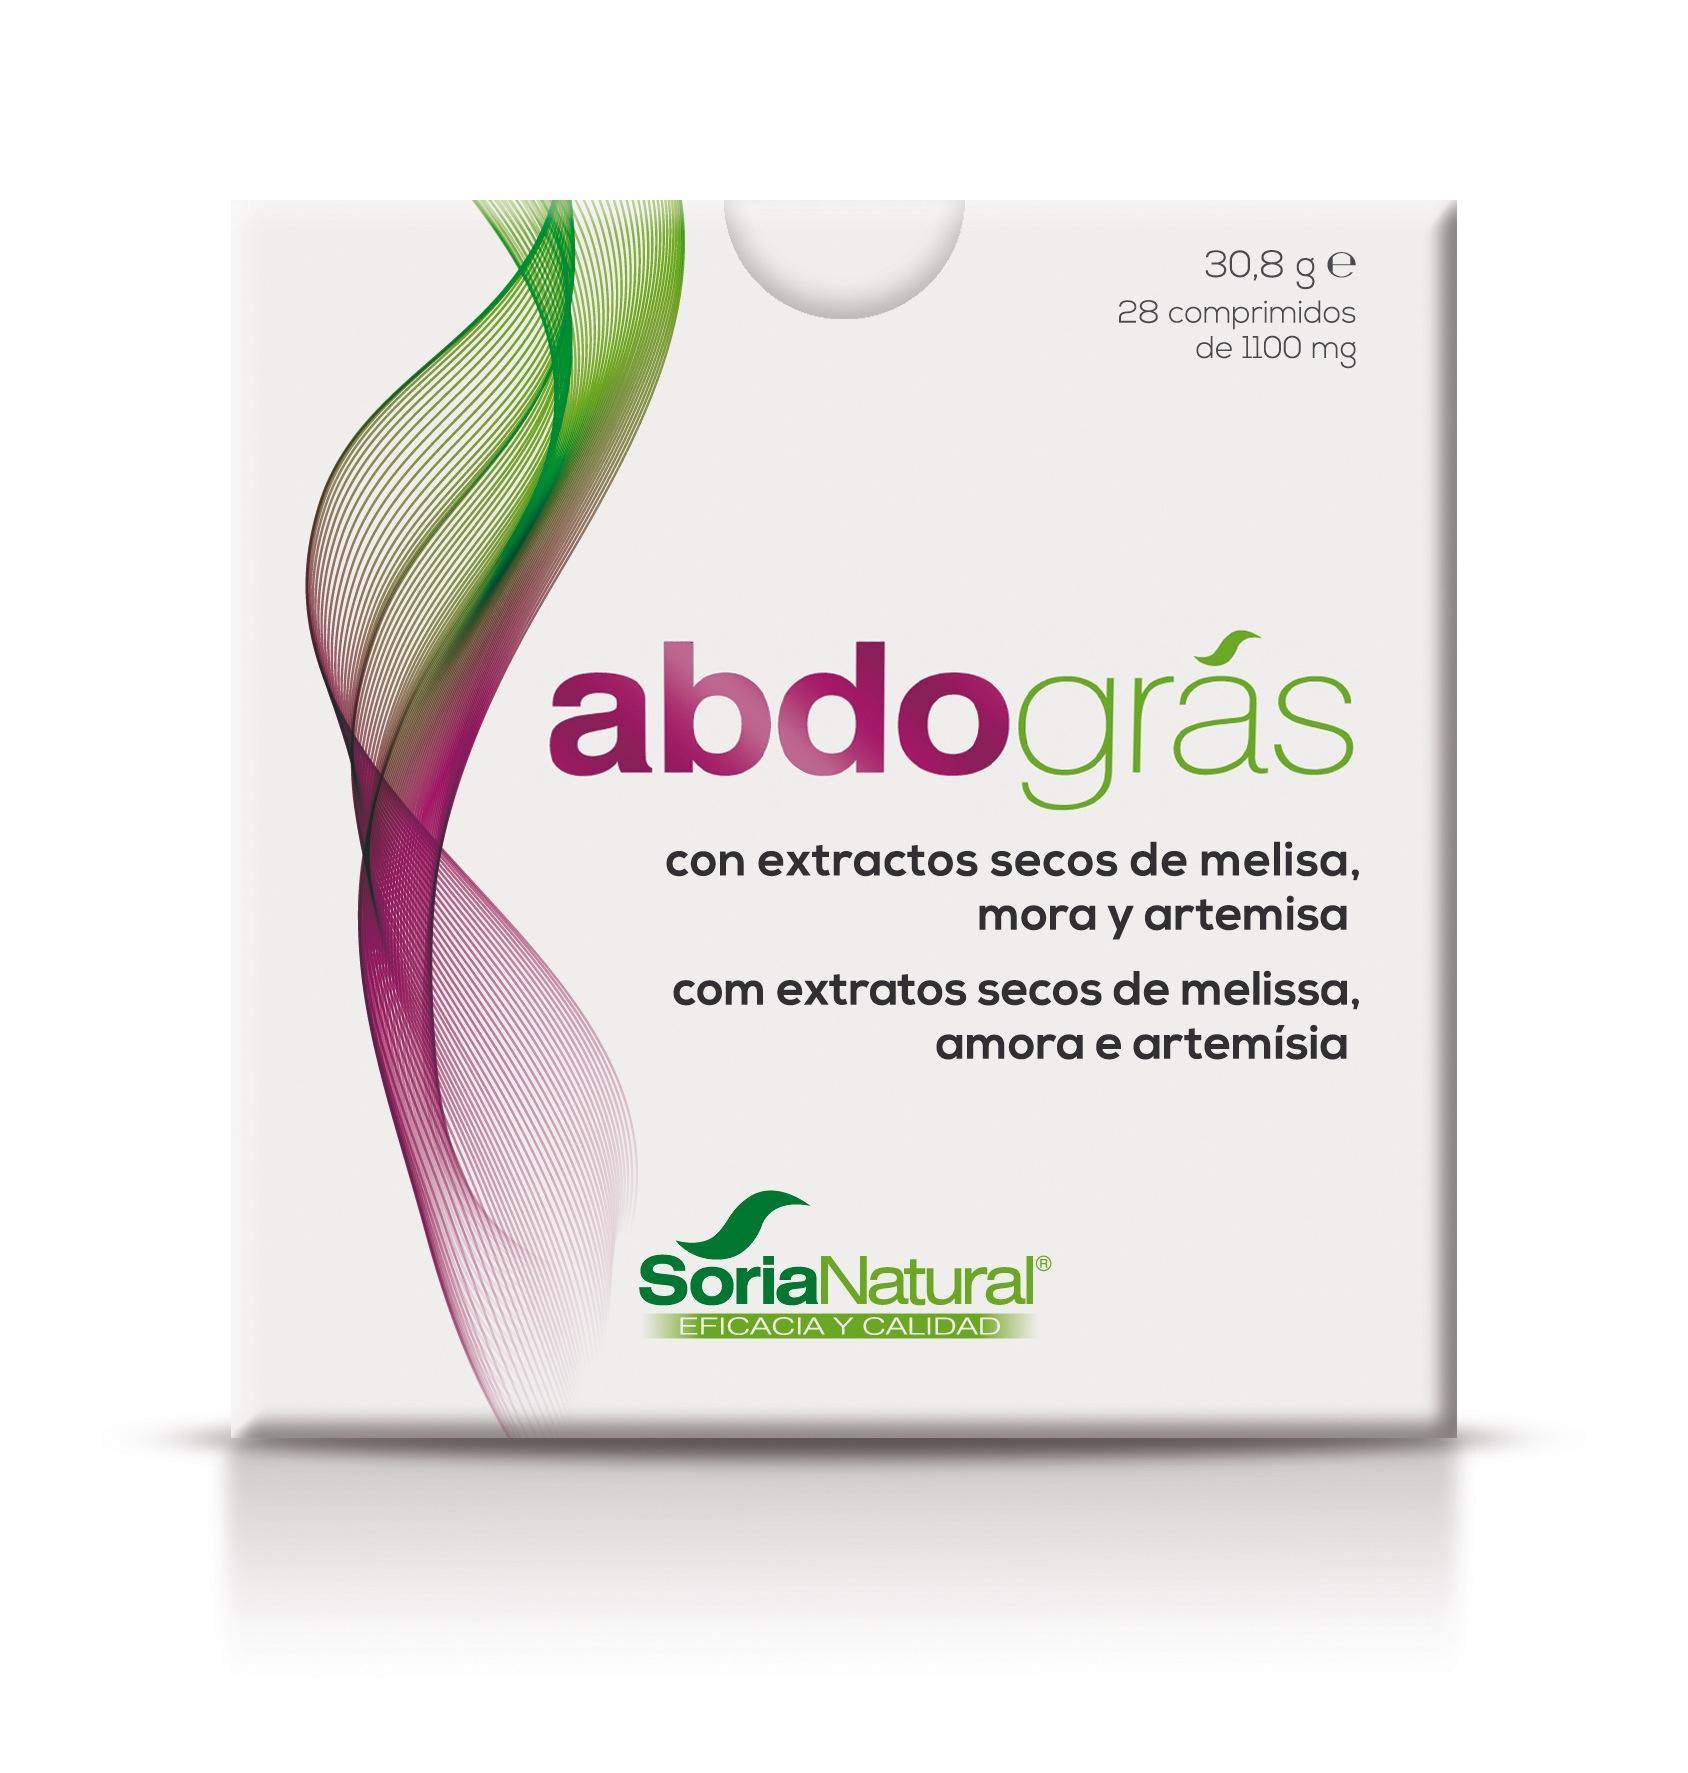 capsulas-abdogras-soria-natural-2.jpg